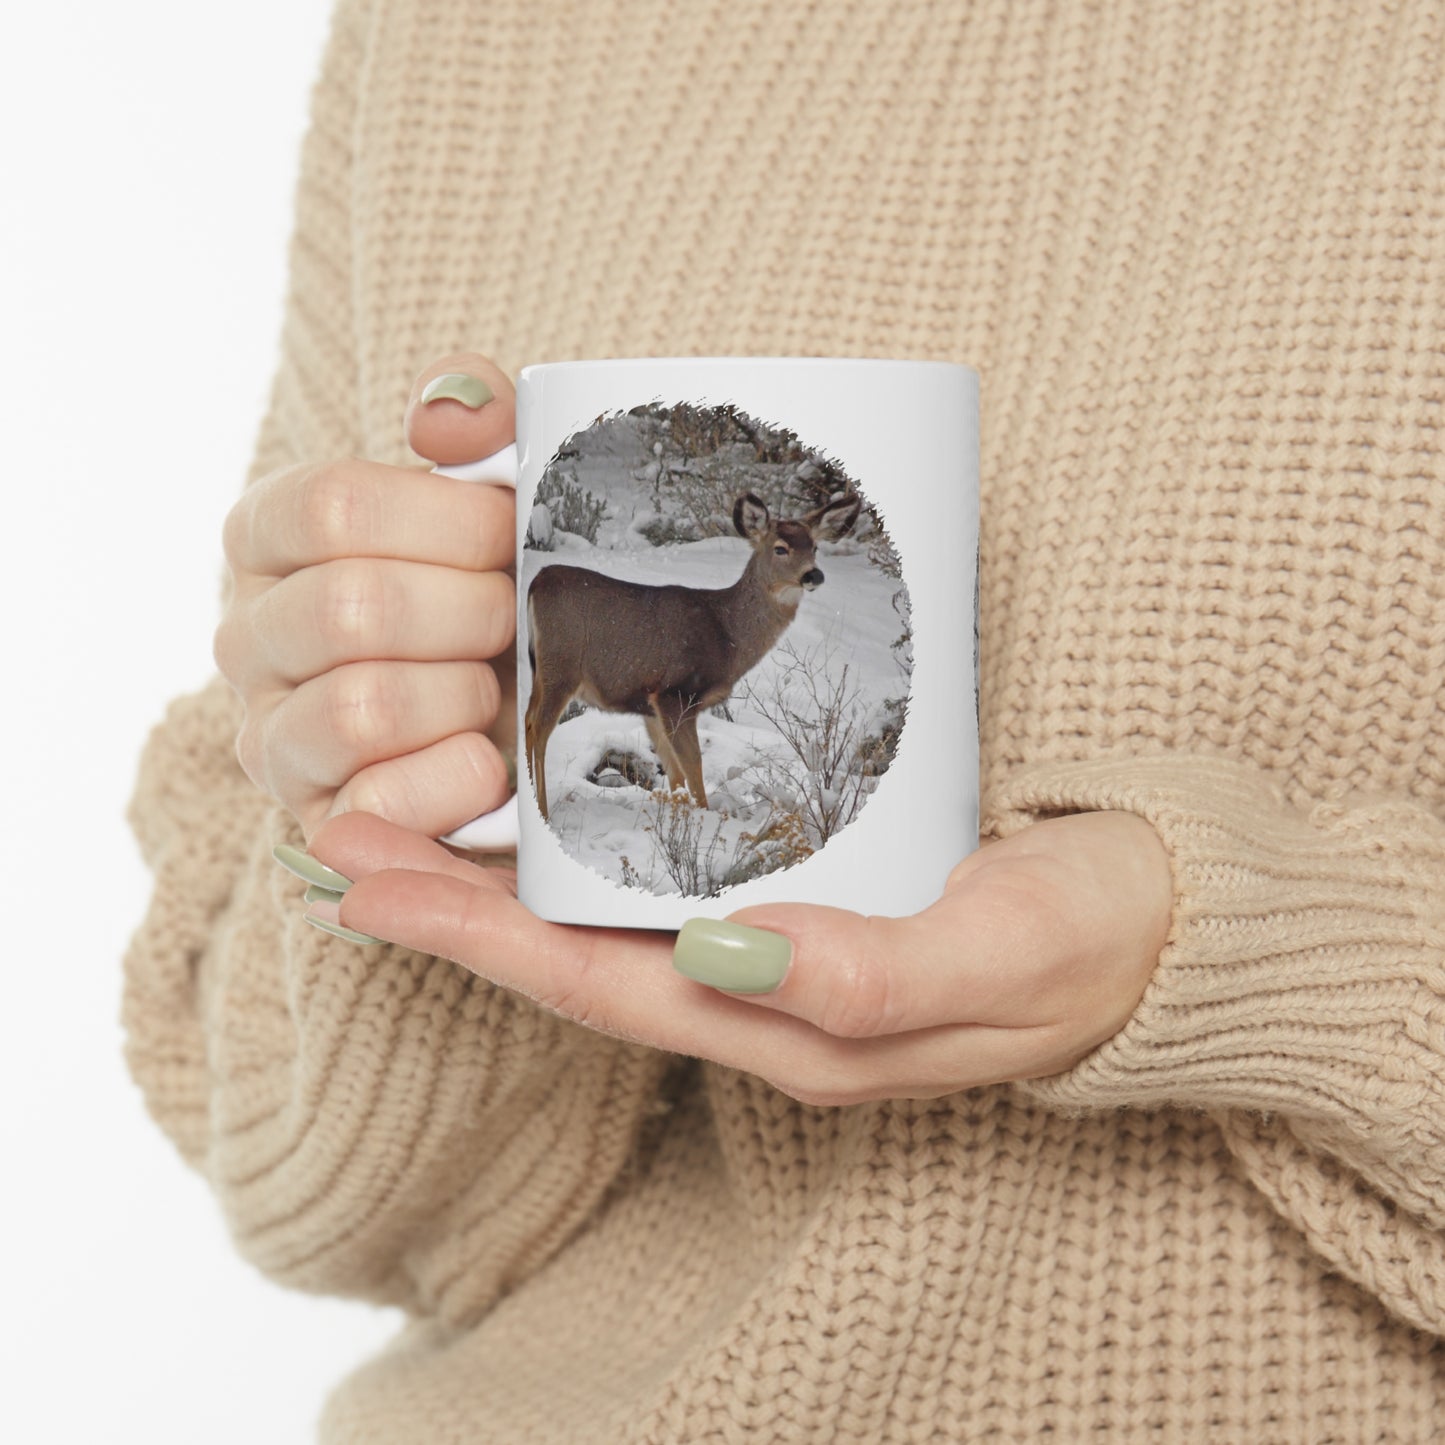 Snowy Deer Ceramic Mug 11oz